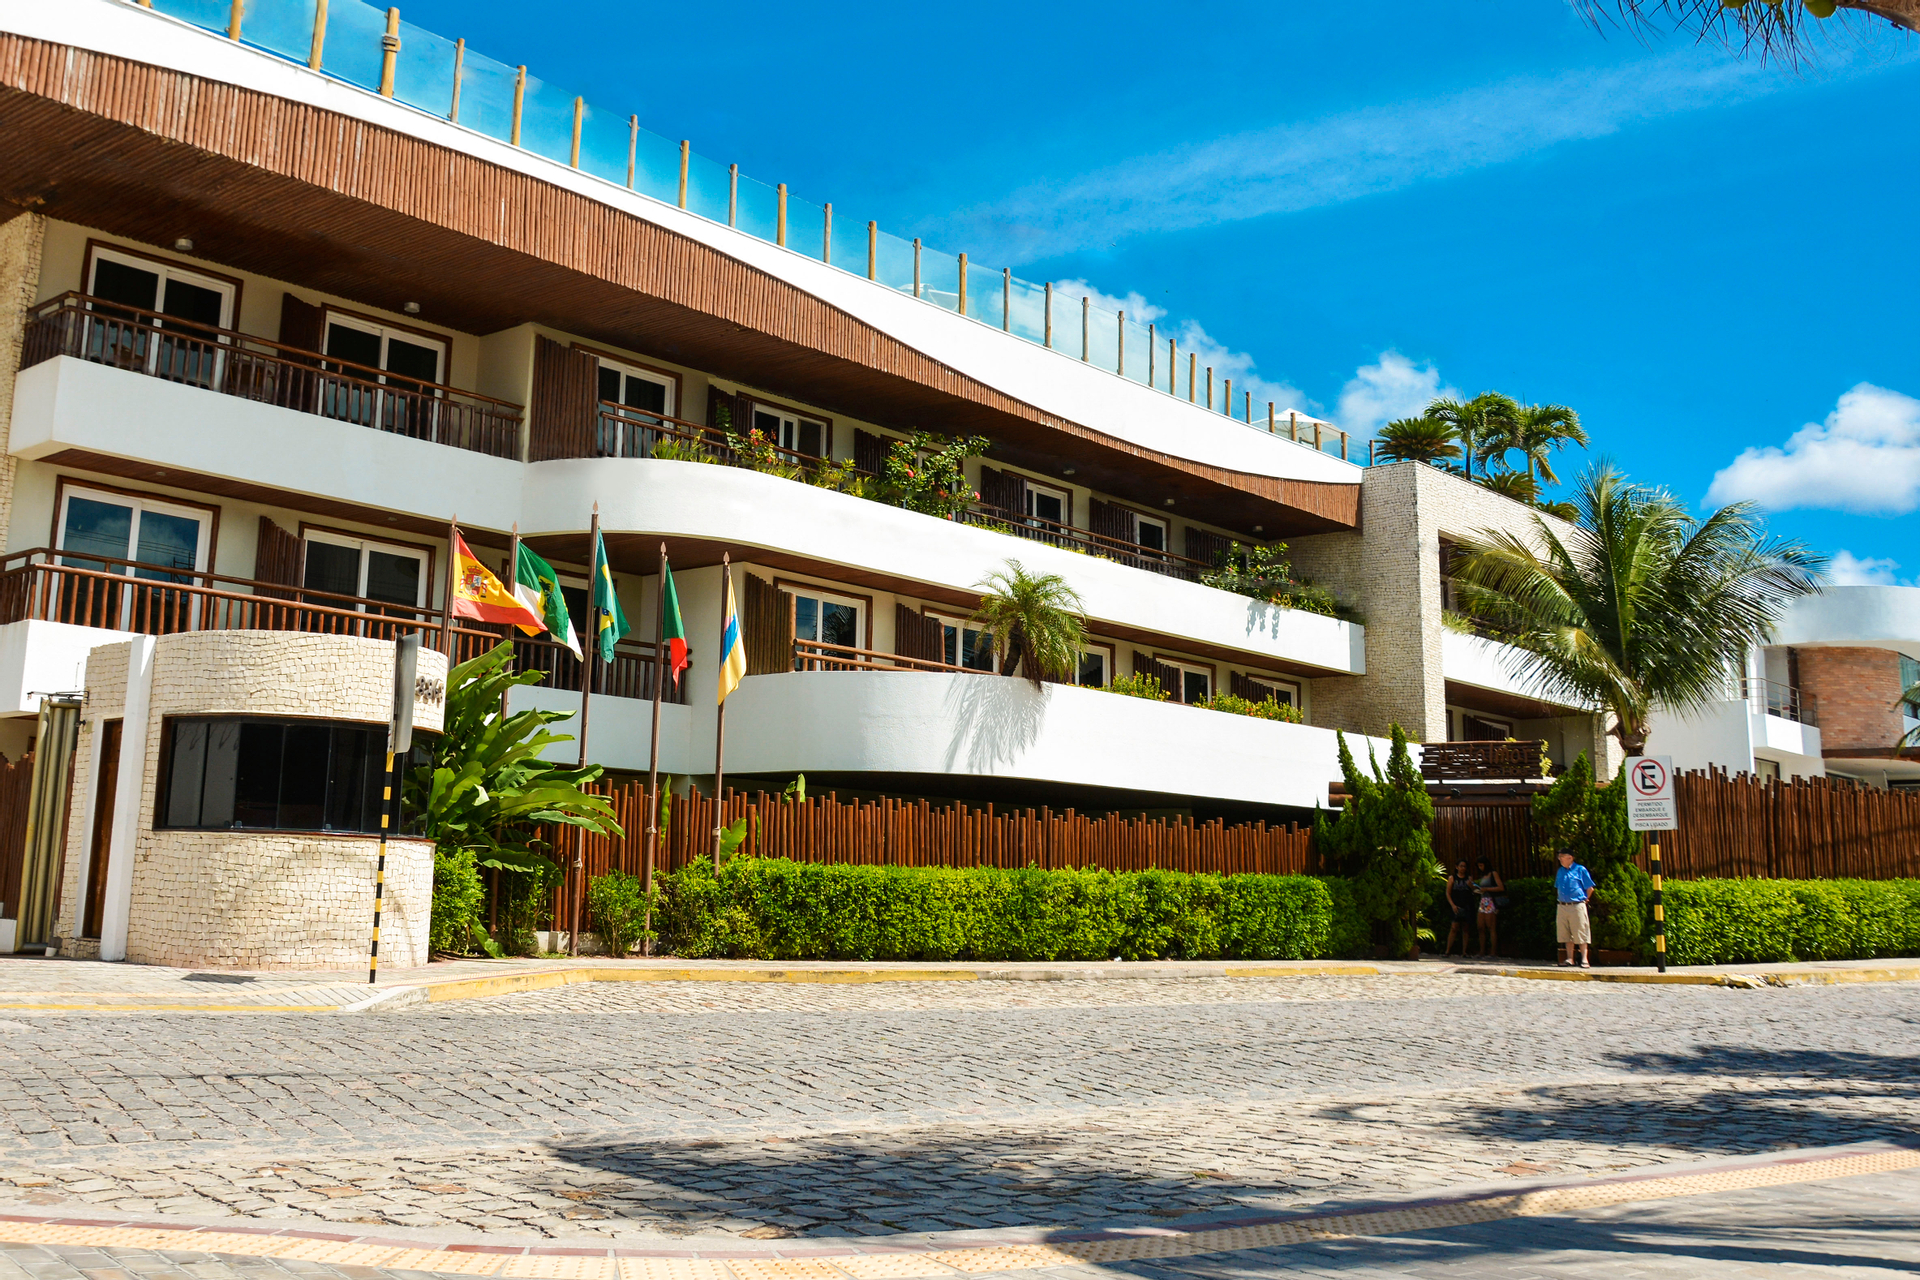 Pontalmar Praia Hotel, Natal